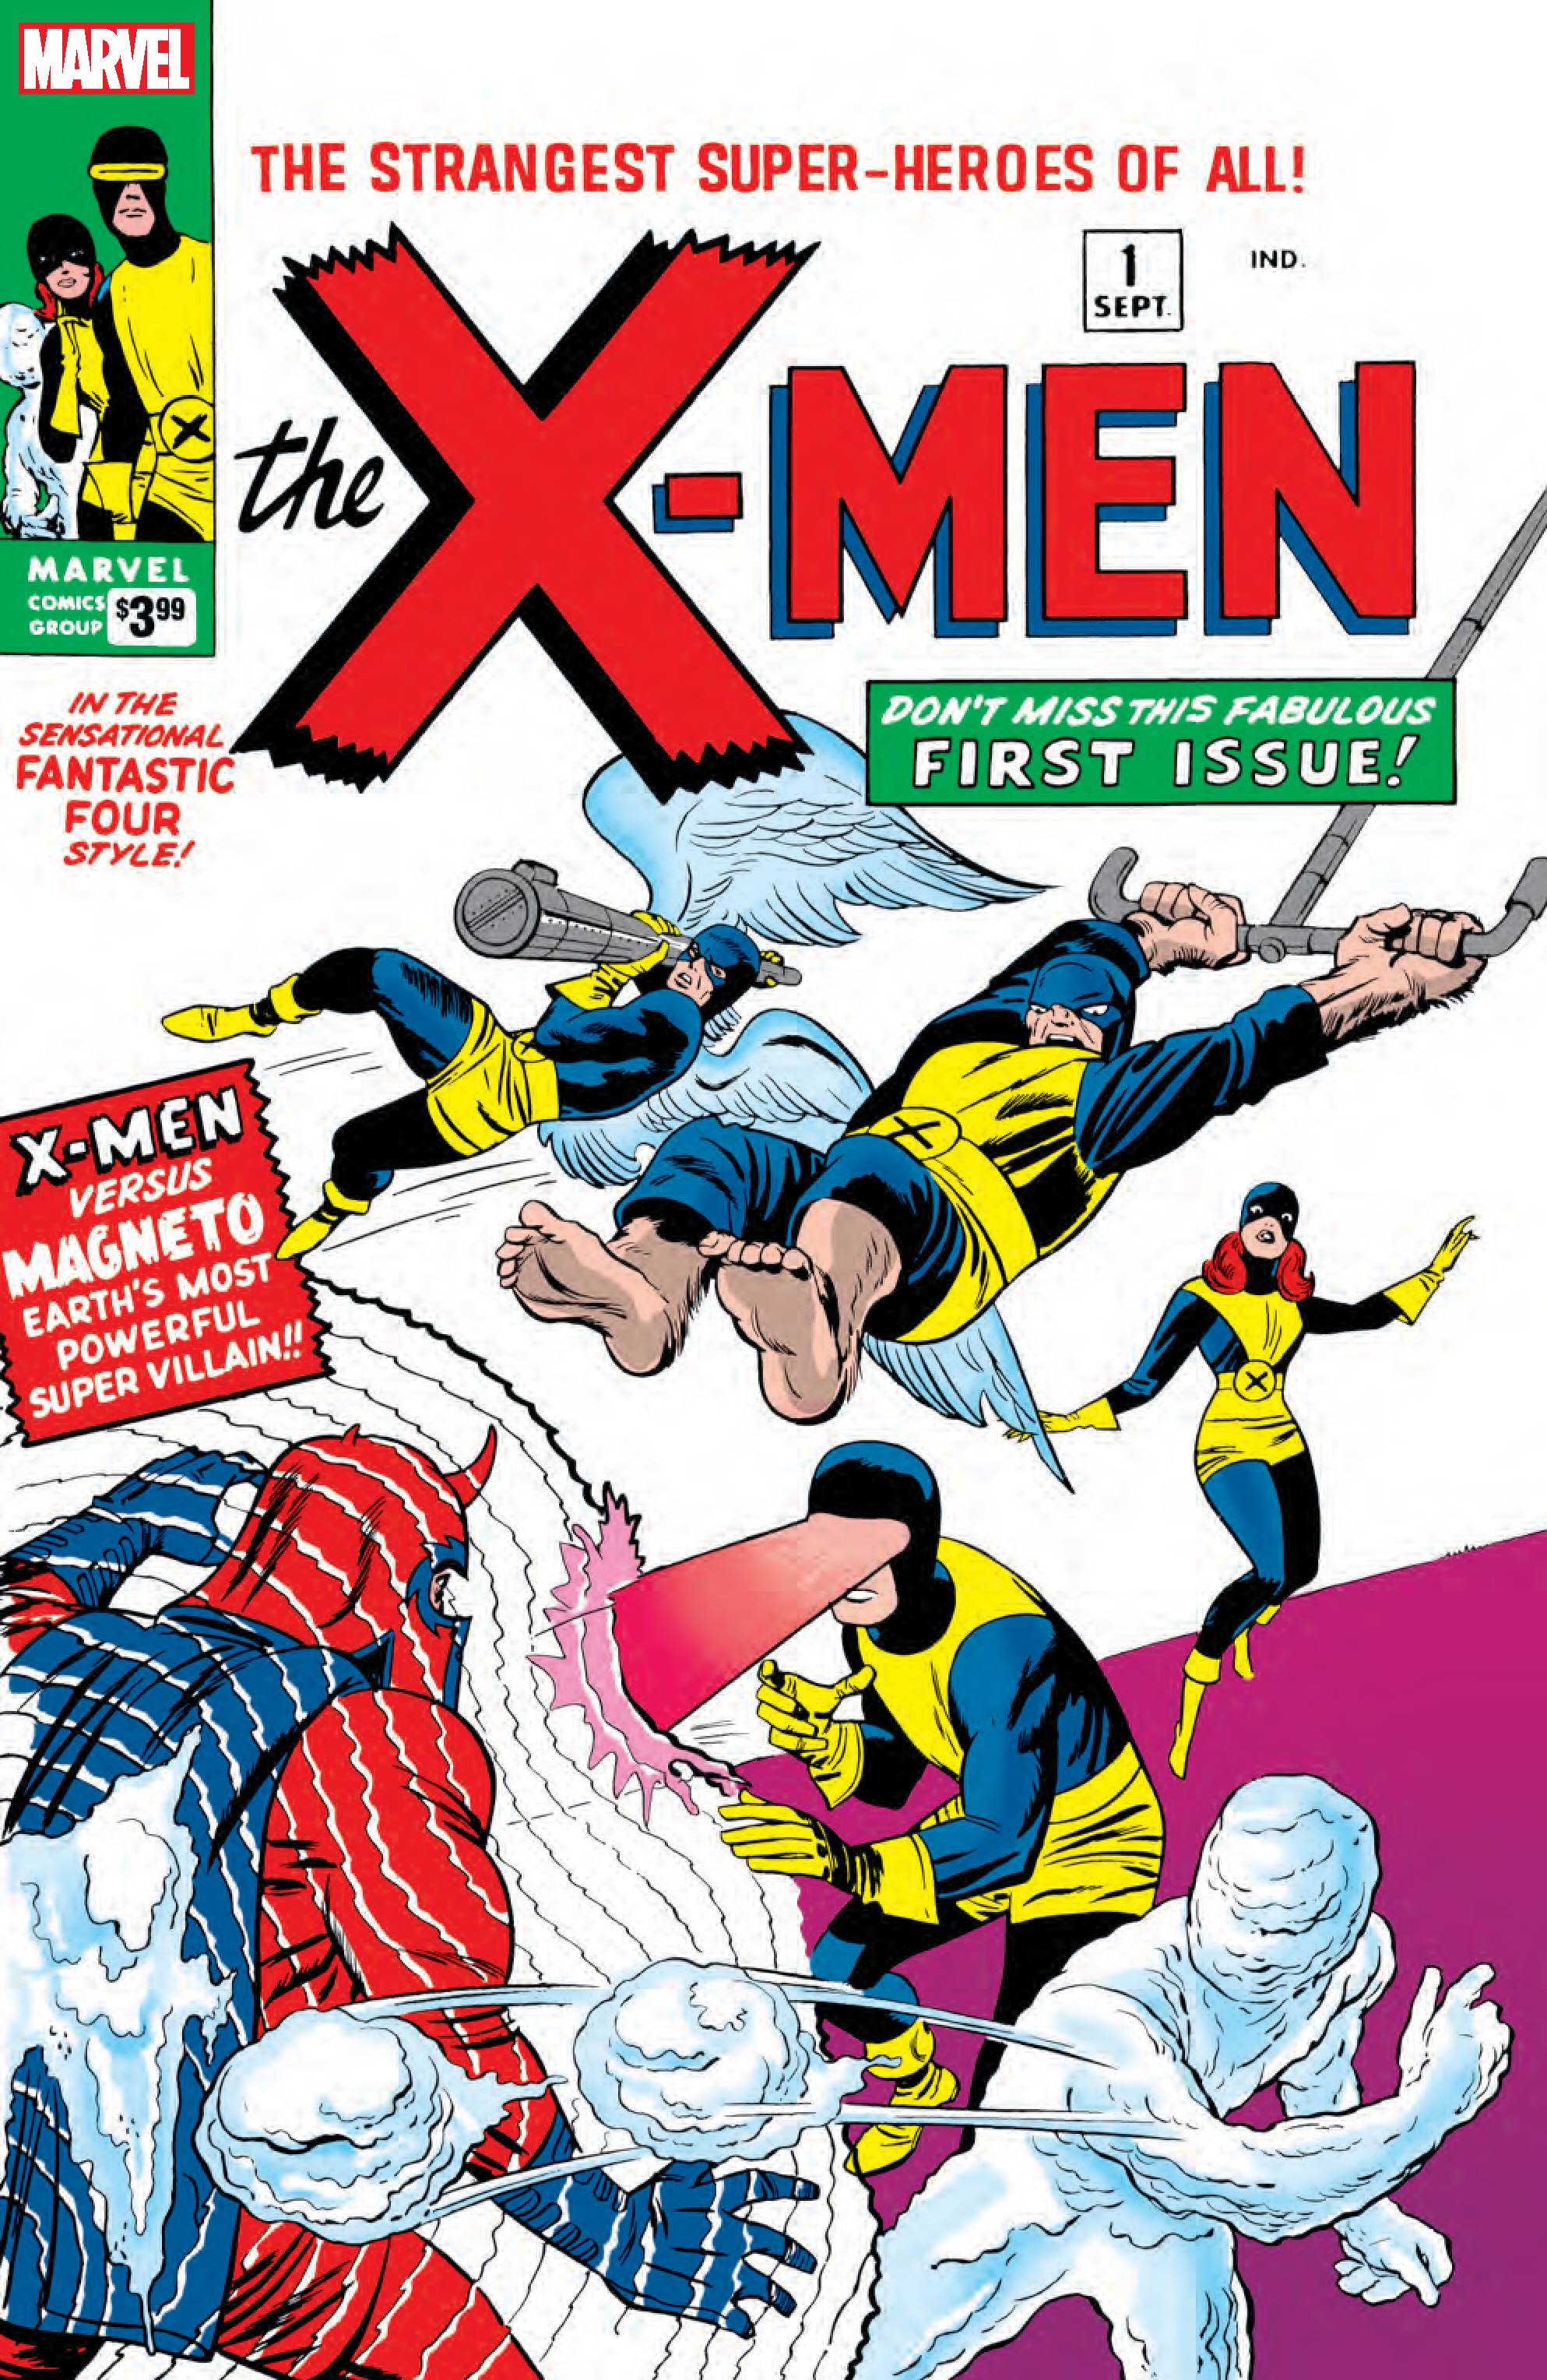 X-MEN #1 FACSIMILE EDITION